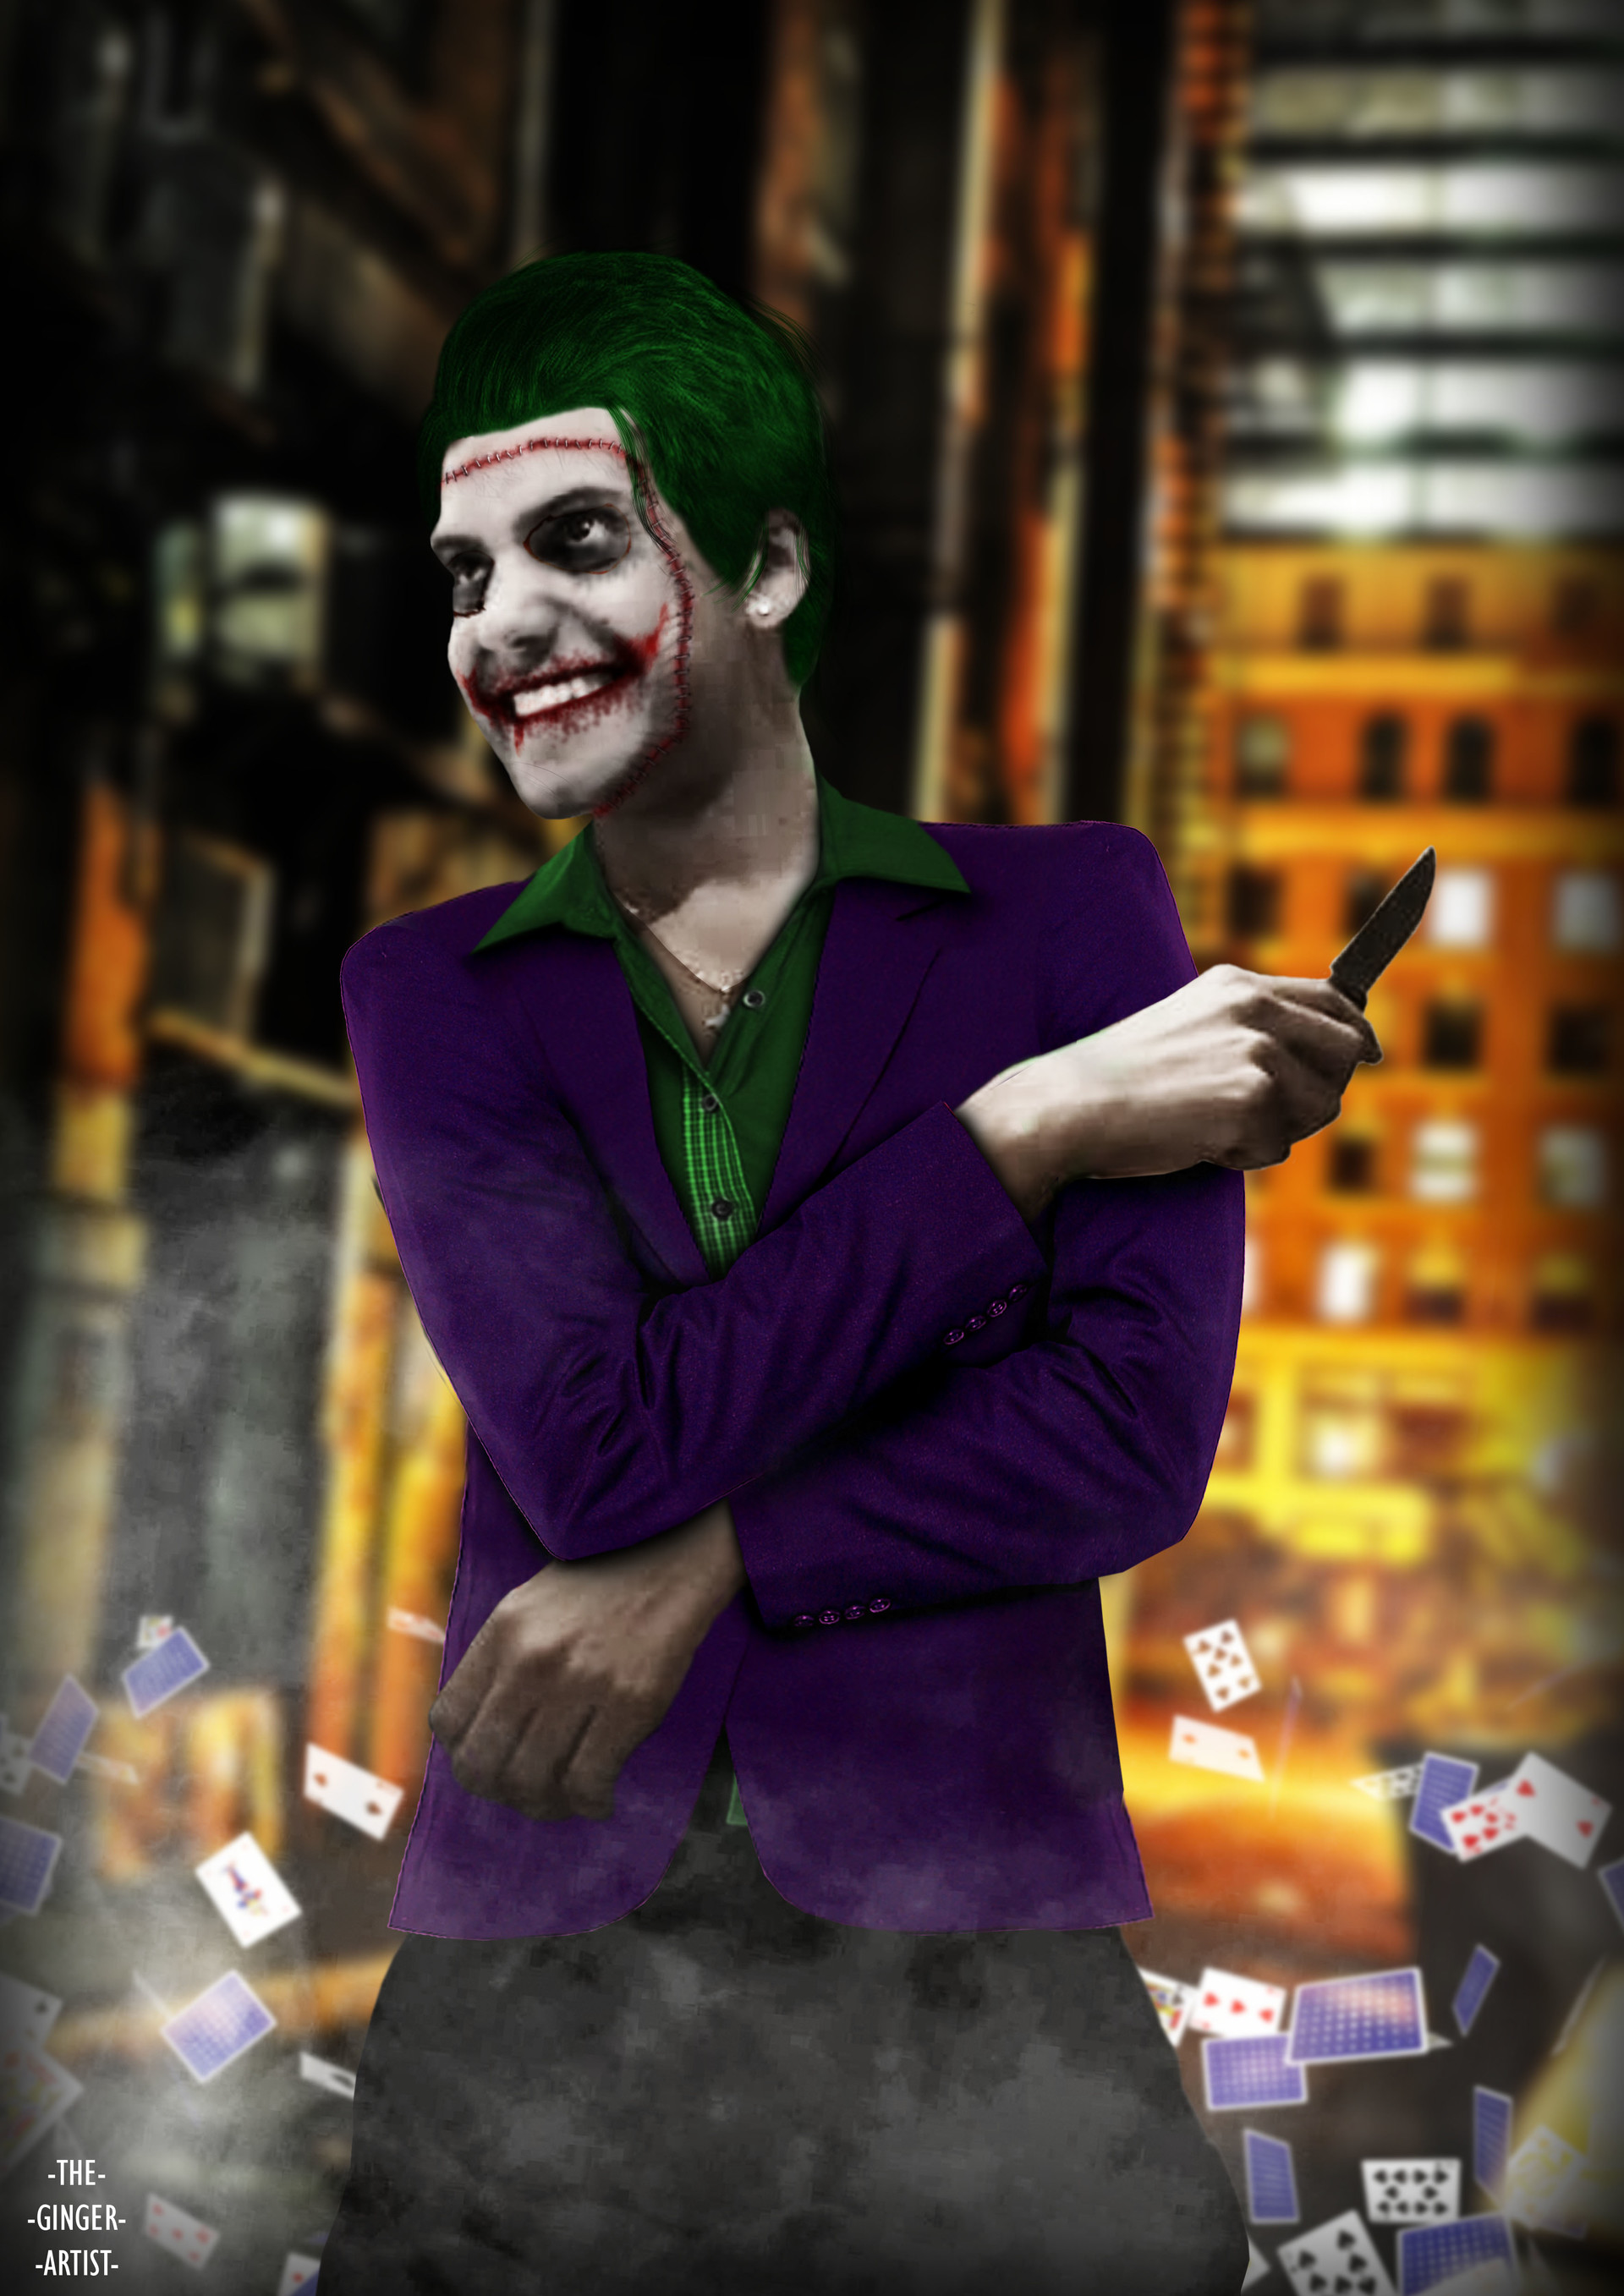 Gotham joker